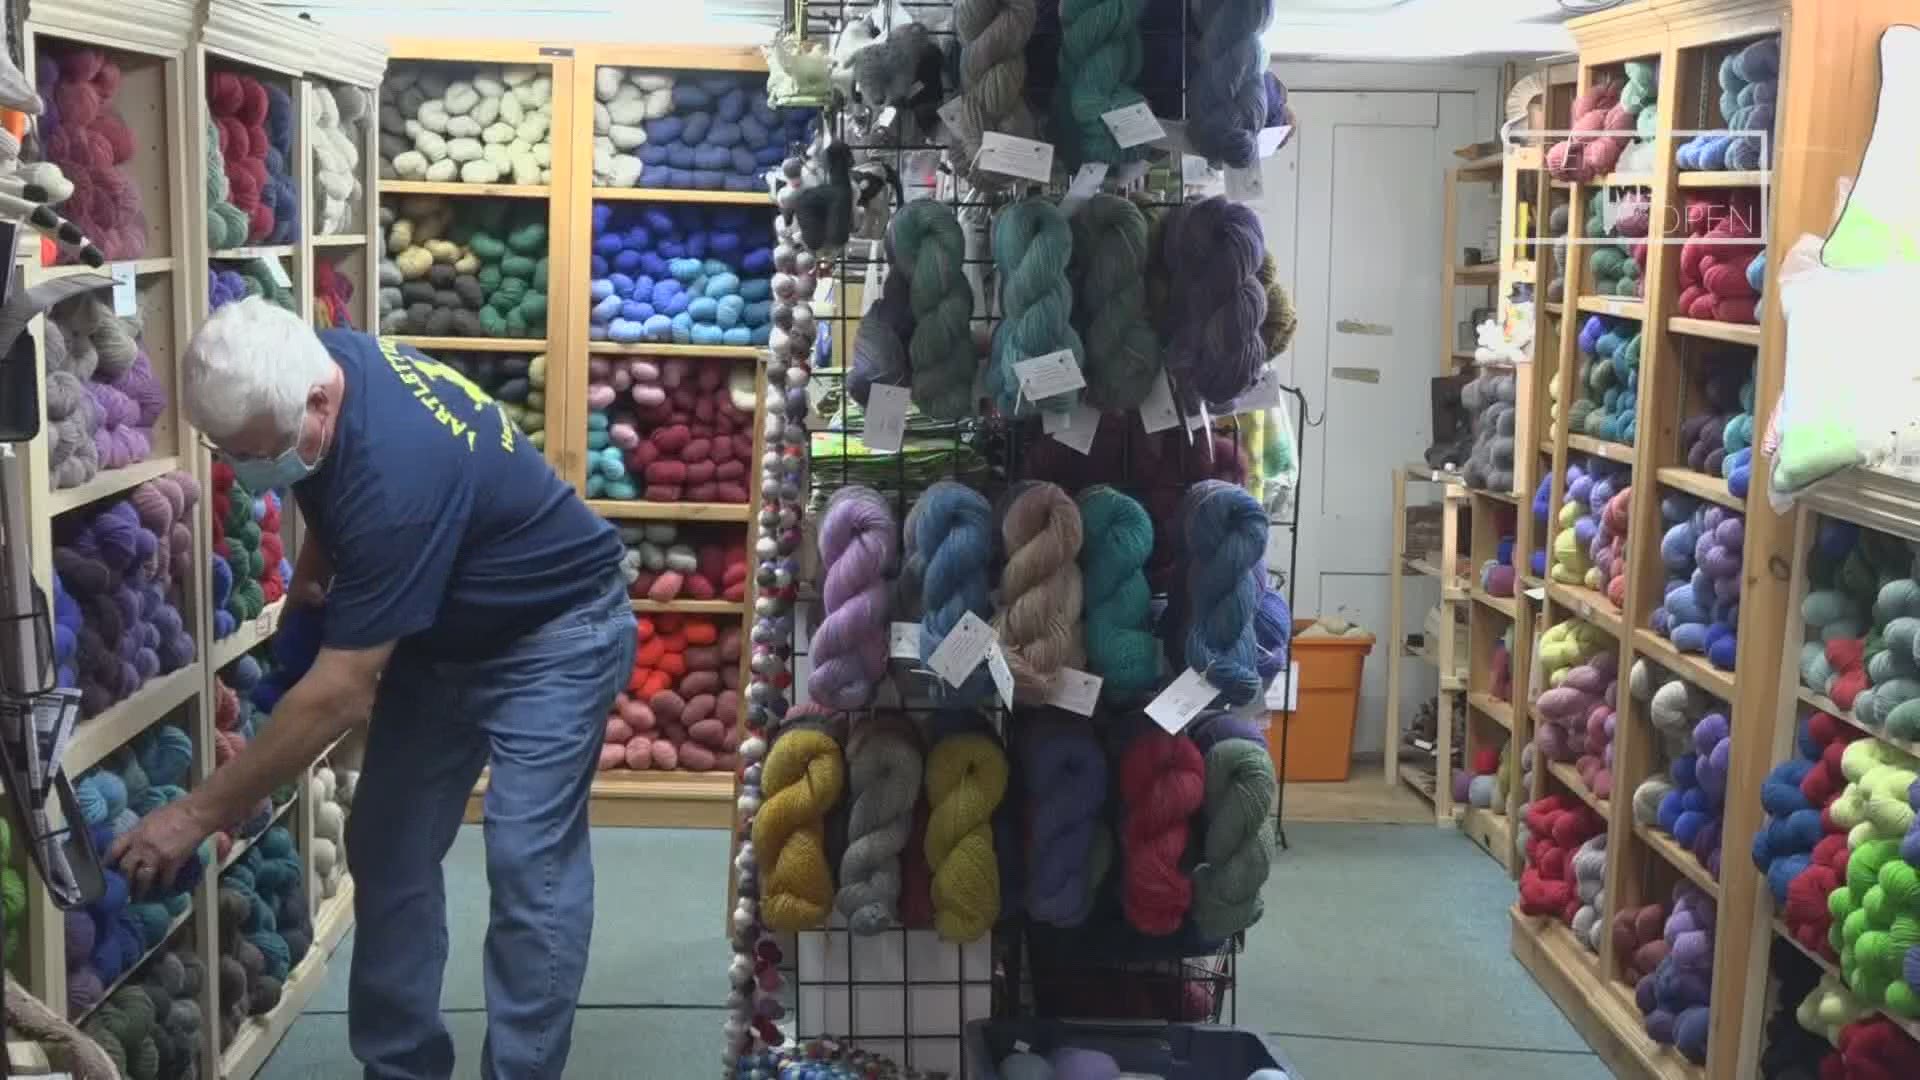 Bartlettyarns wool mill celebrates 200 years in business